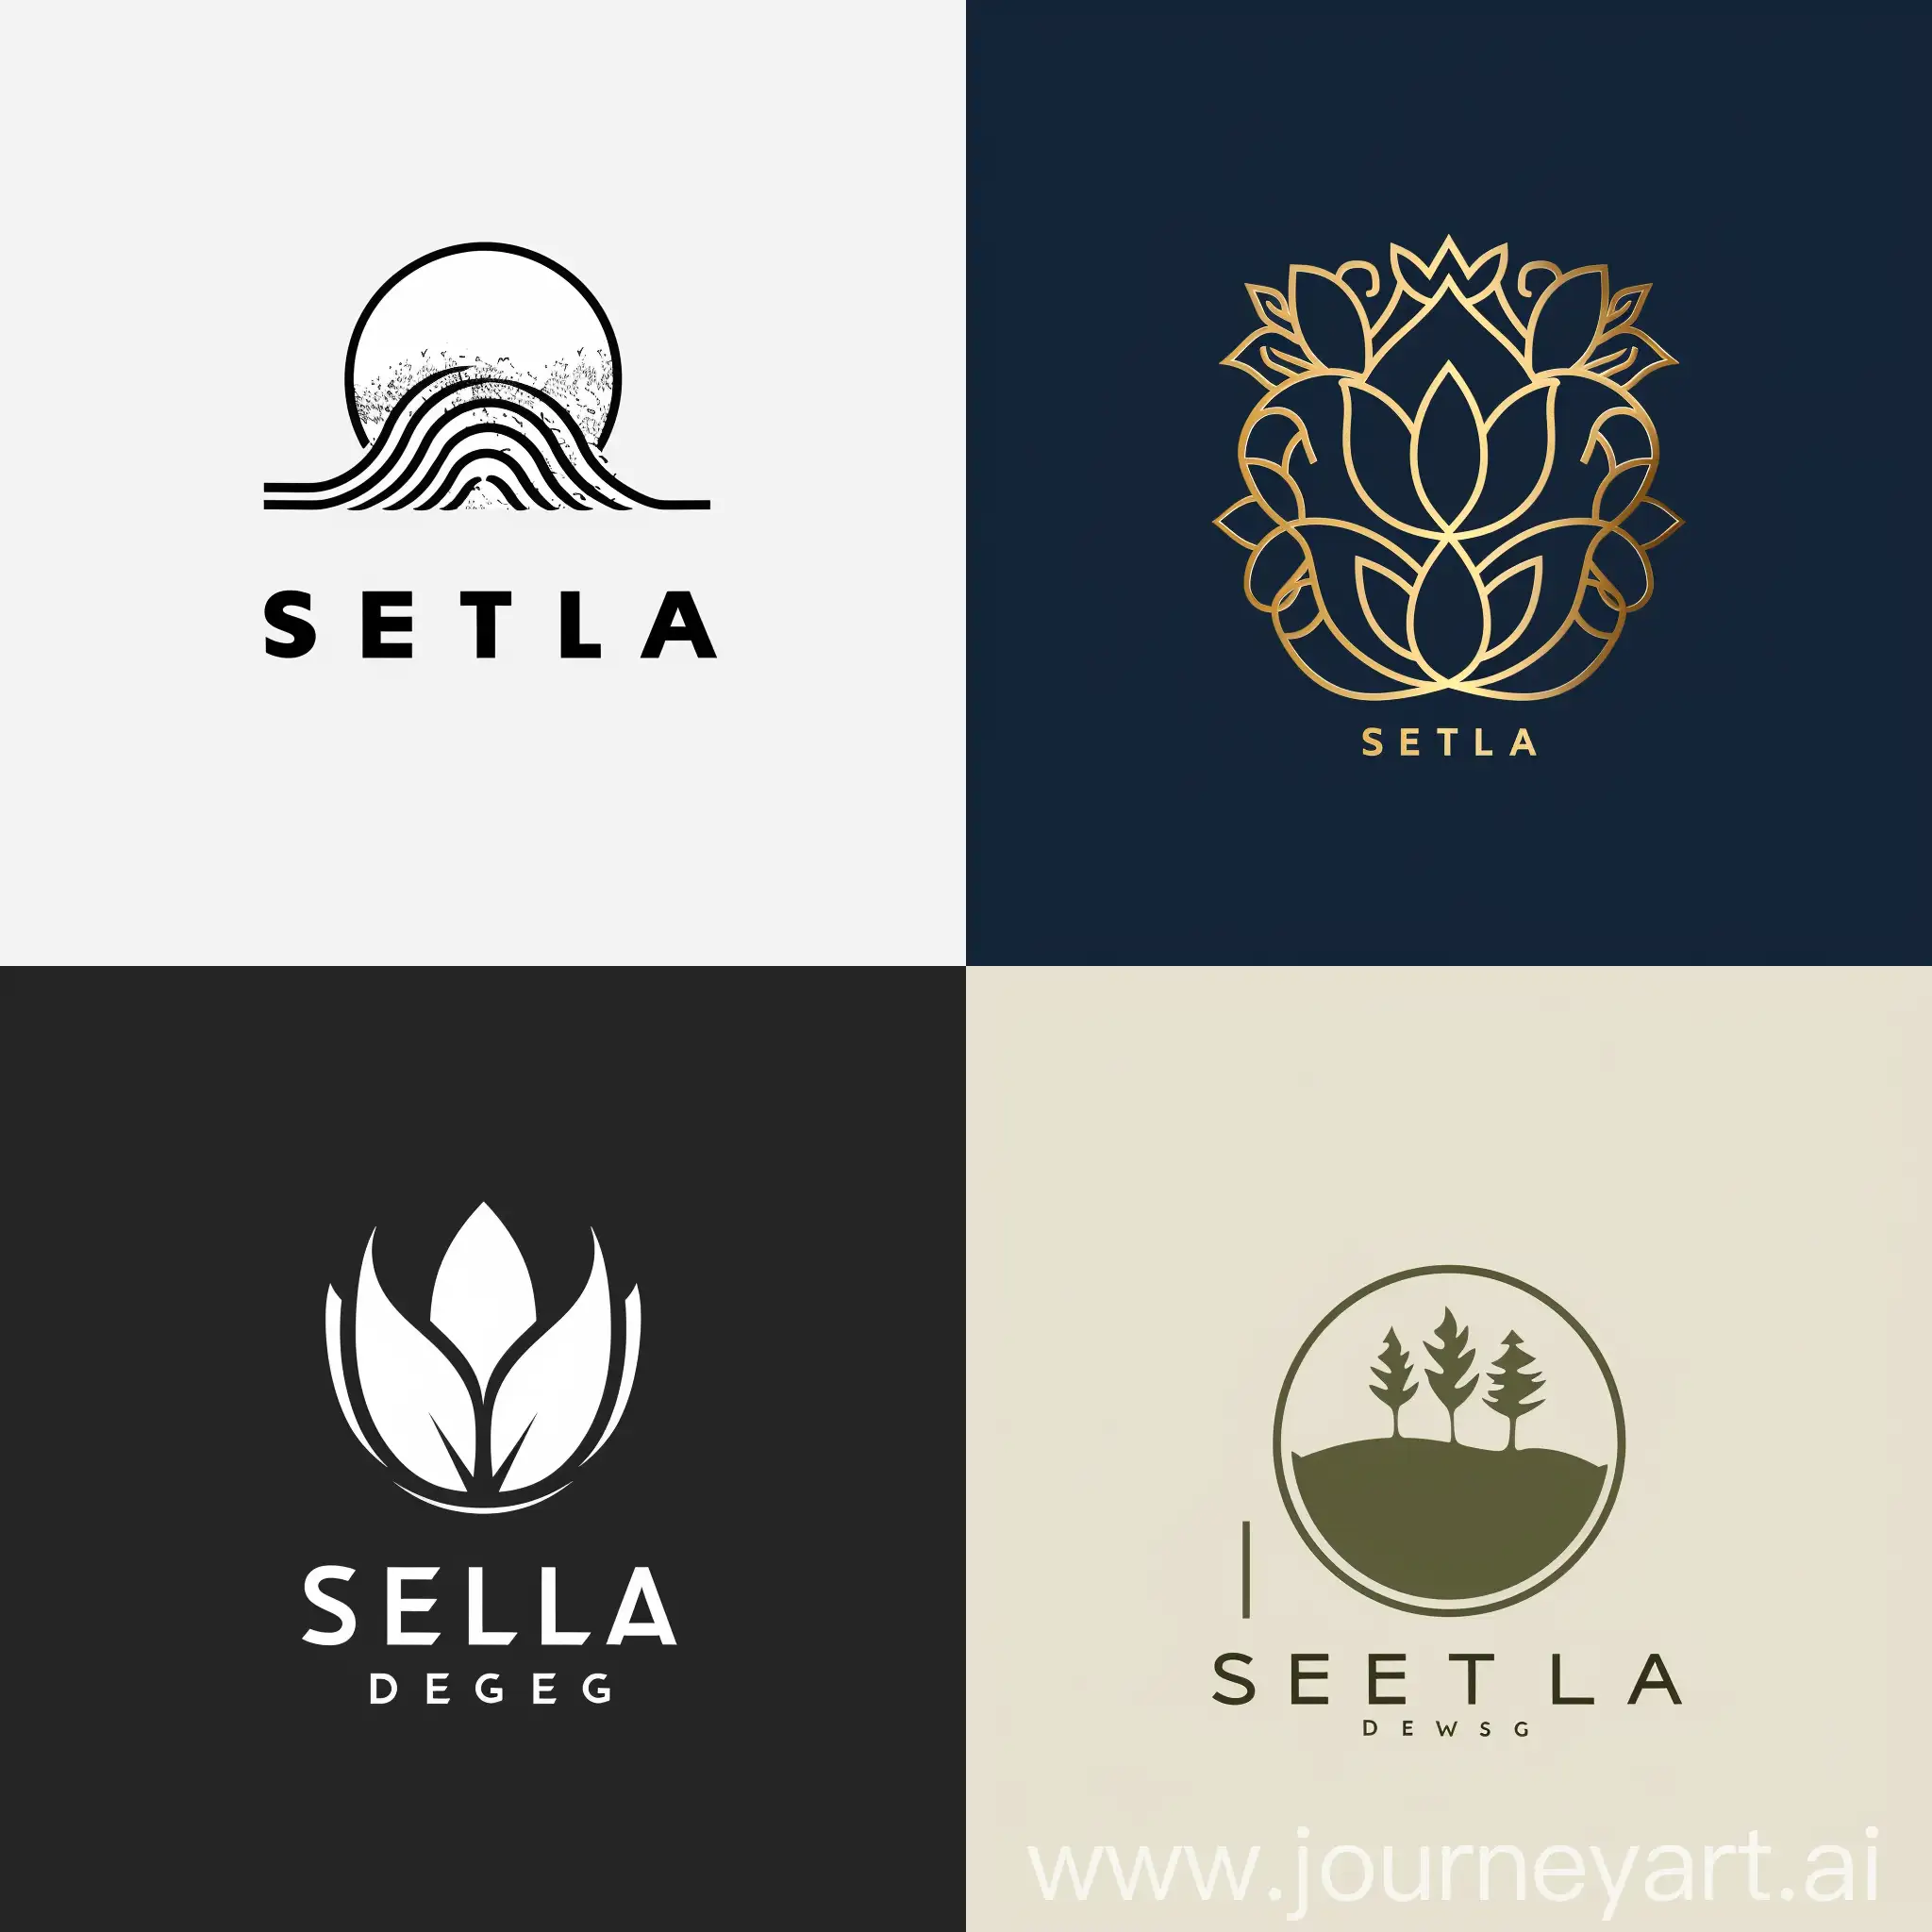 Modern-Setla-Design-Logo-with-Vibrant-Colors-and-Geometric-Elements